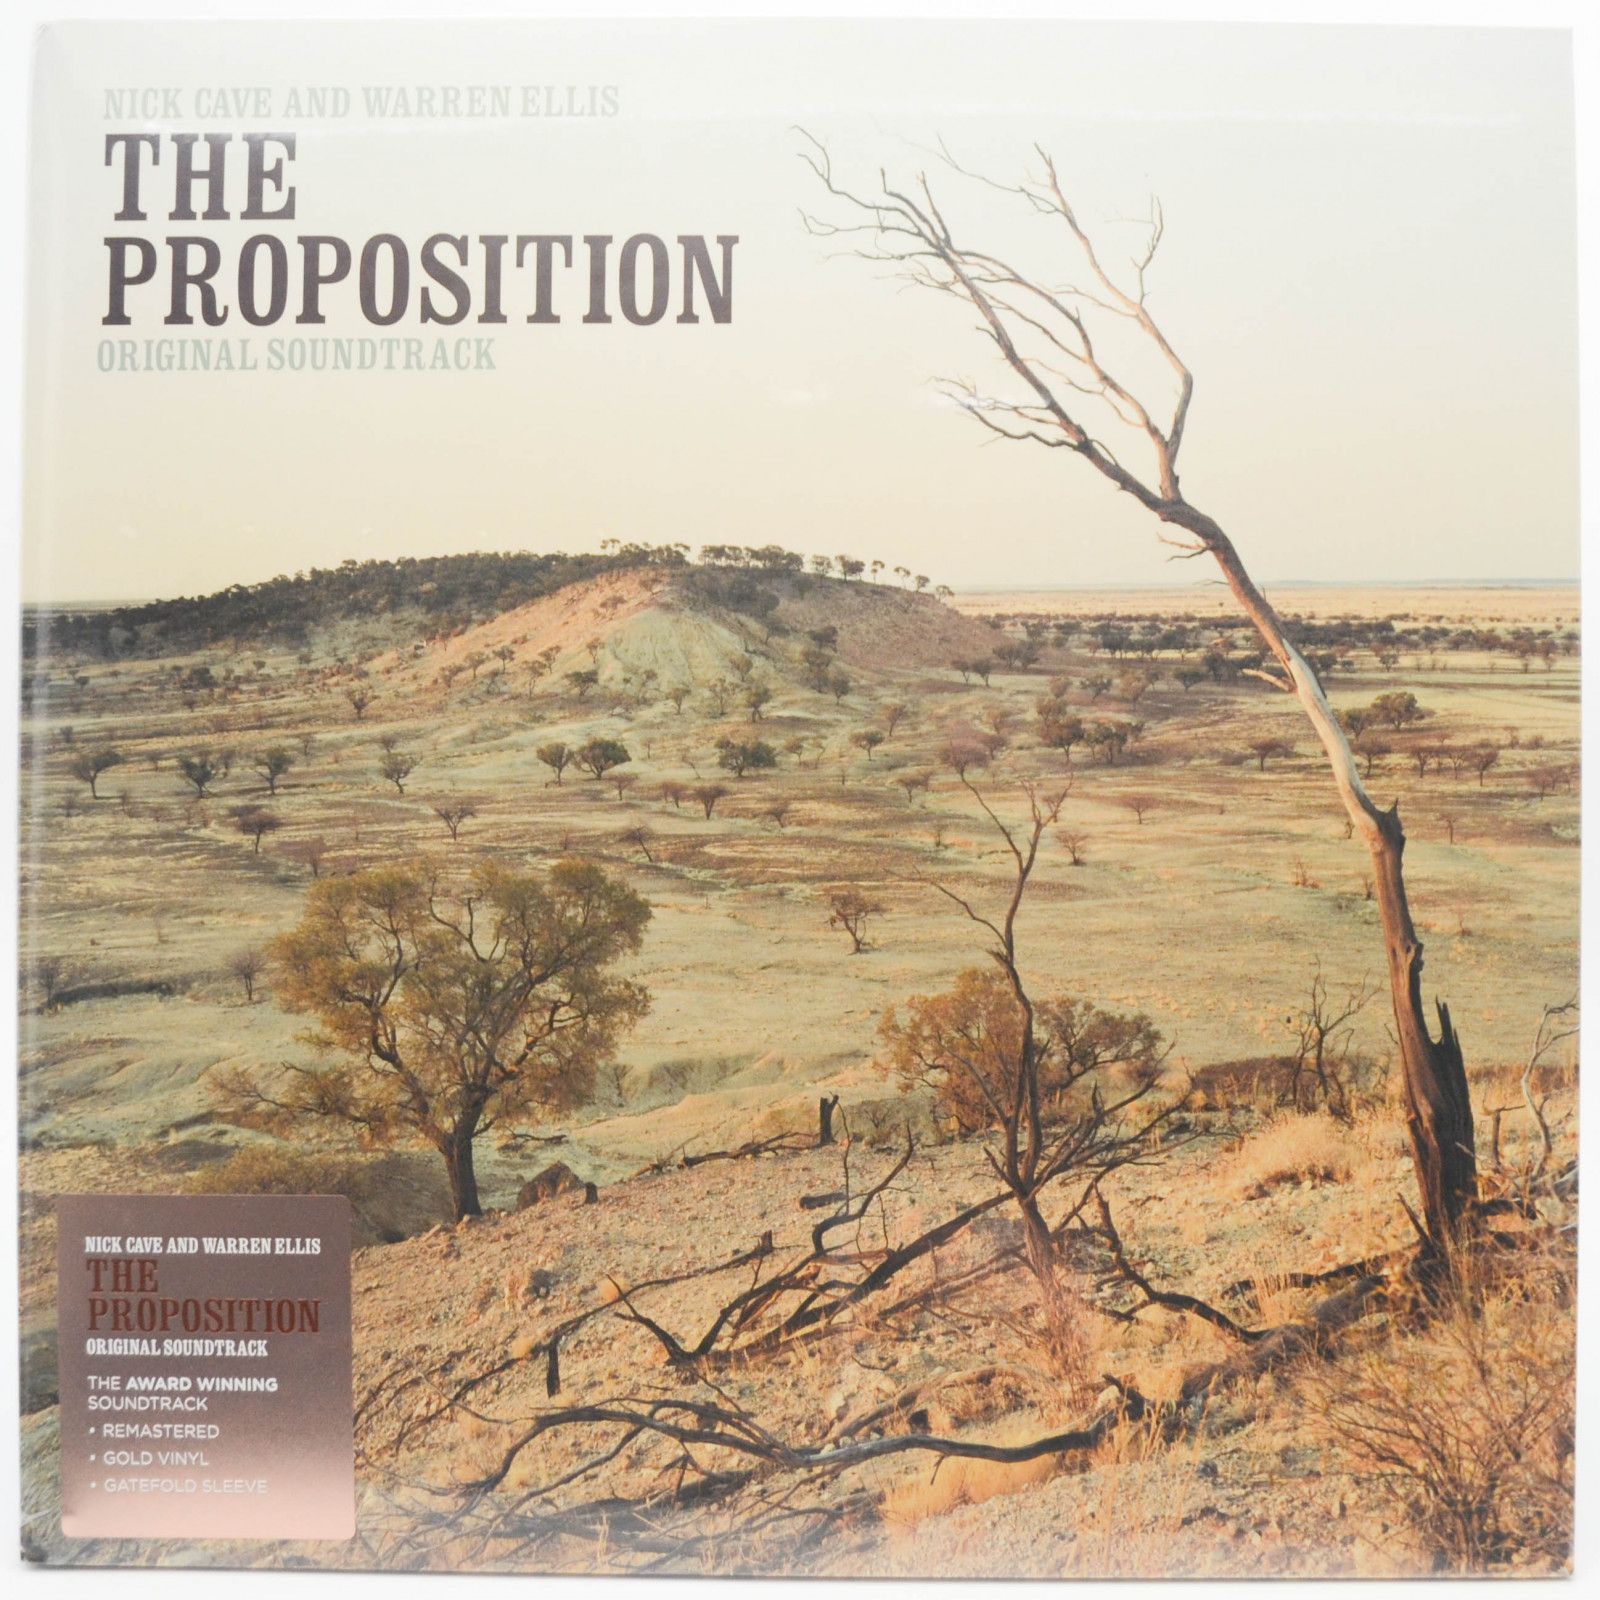 Nick Cave And Warren Ellis — The Proposition (Original Soundtrack), 2005